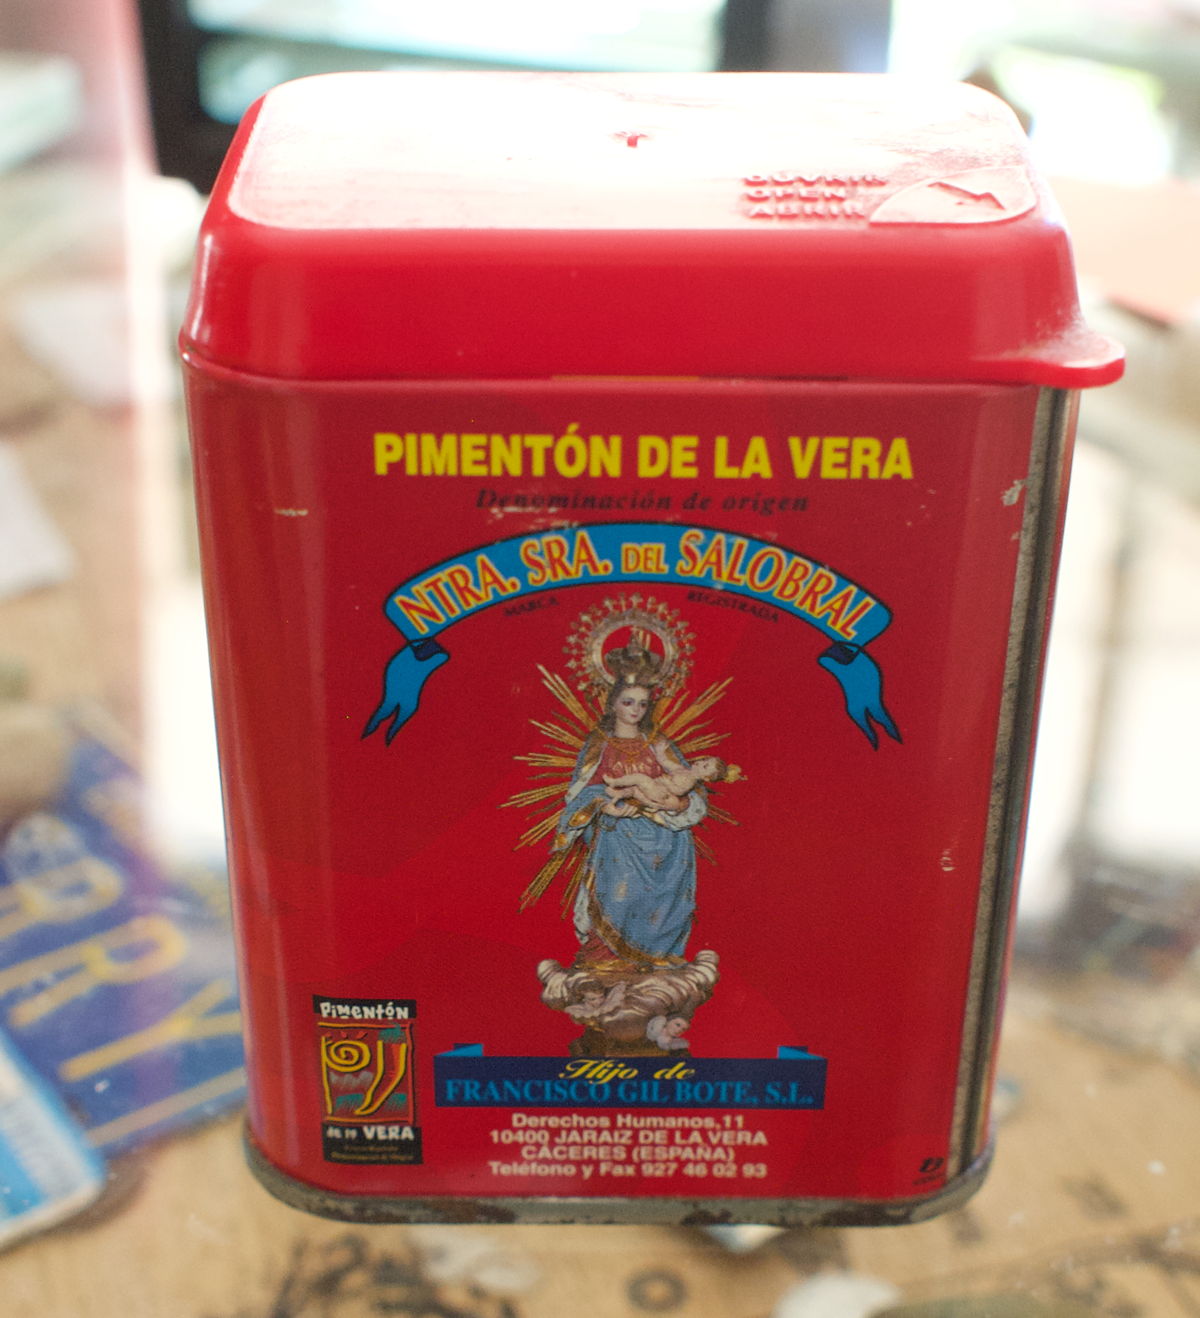 Pimentón de la Vera: A box of Spanish smoked paprika.; Spain; paprika